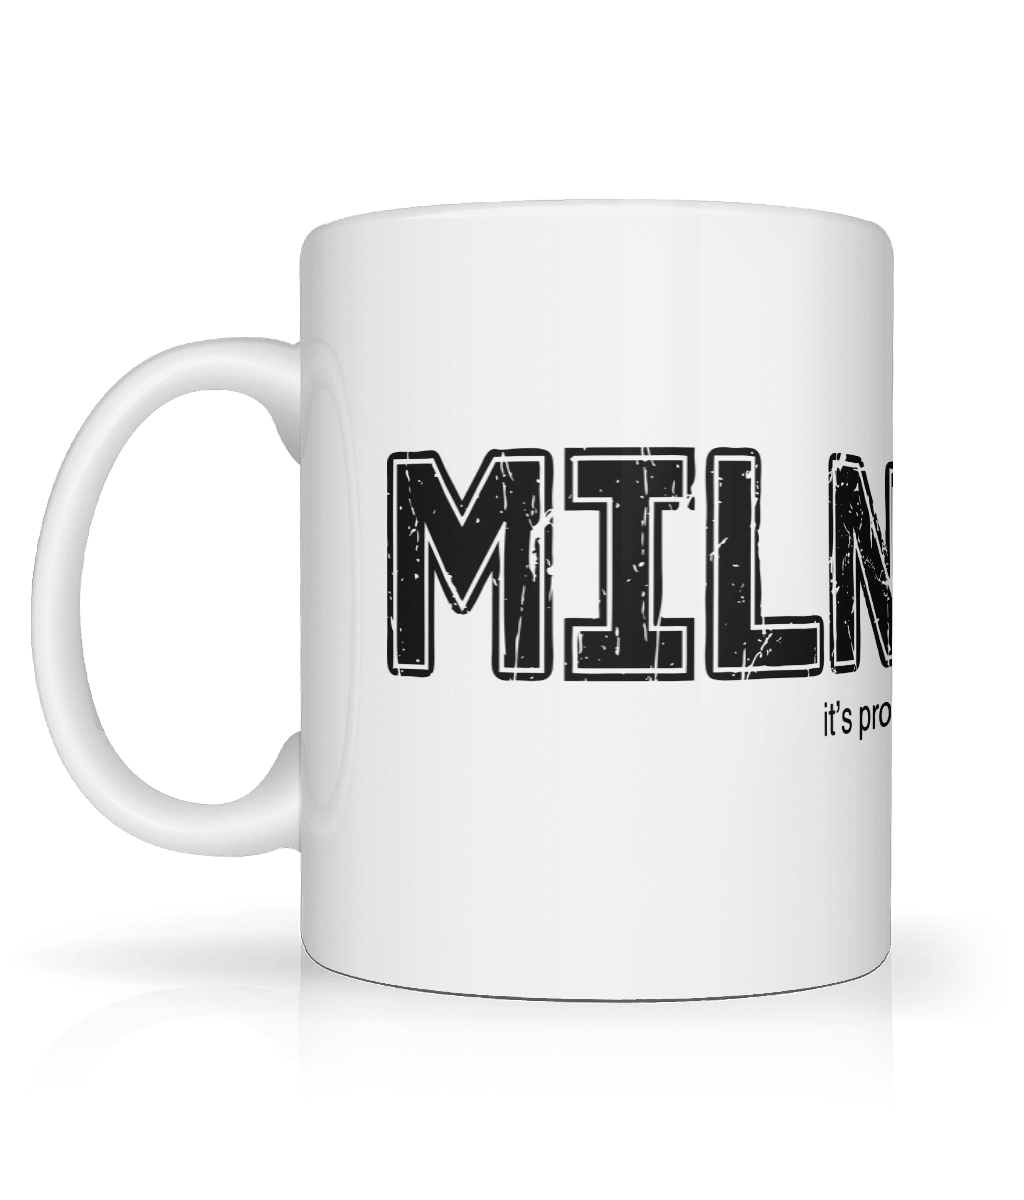 Mingavie (it's pronounced Milngavie) mug